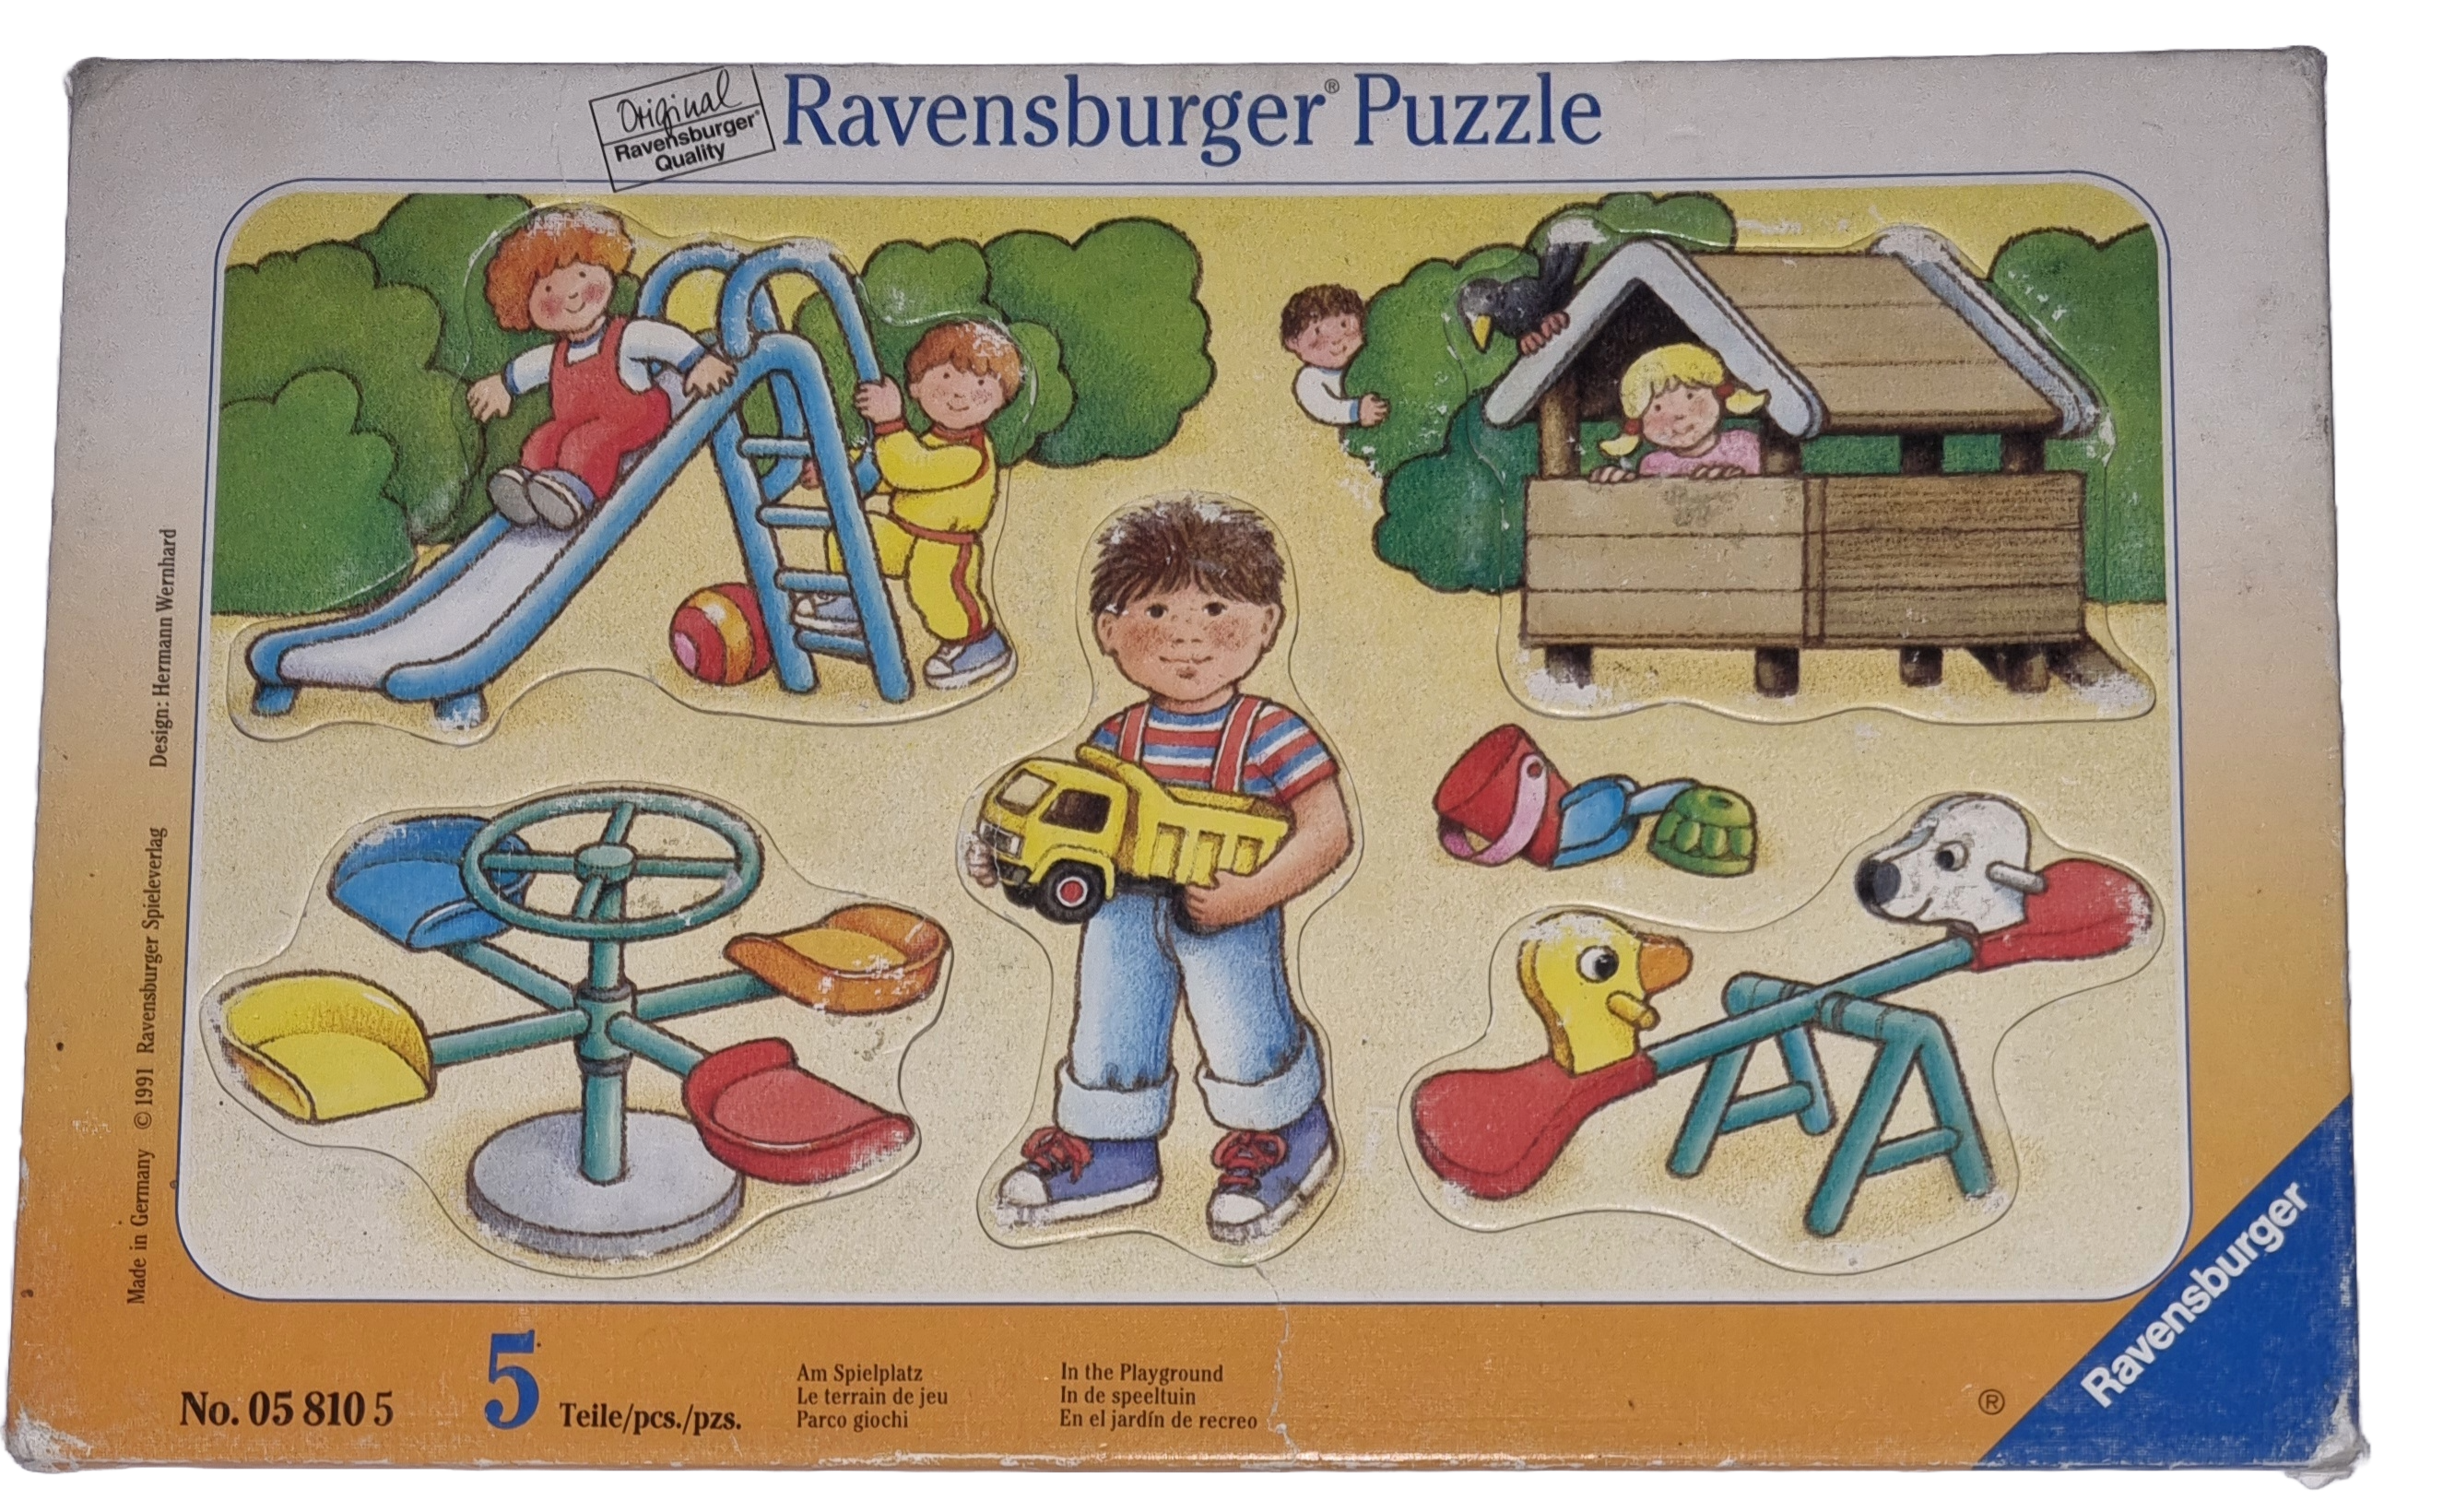 Ravensburger Rahmenpuzzle Auf dem Spielplatz No. 058105 Puzzle 5 Teile